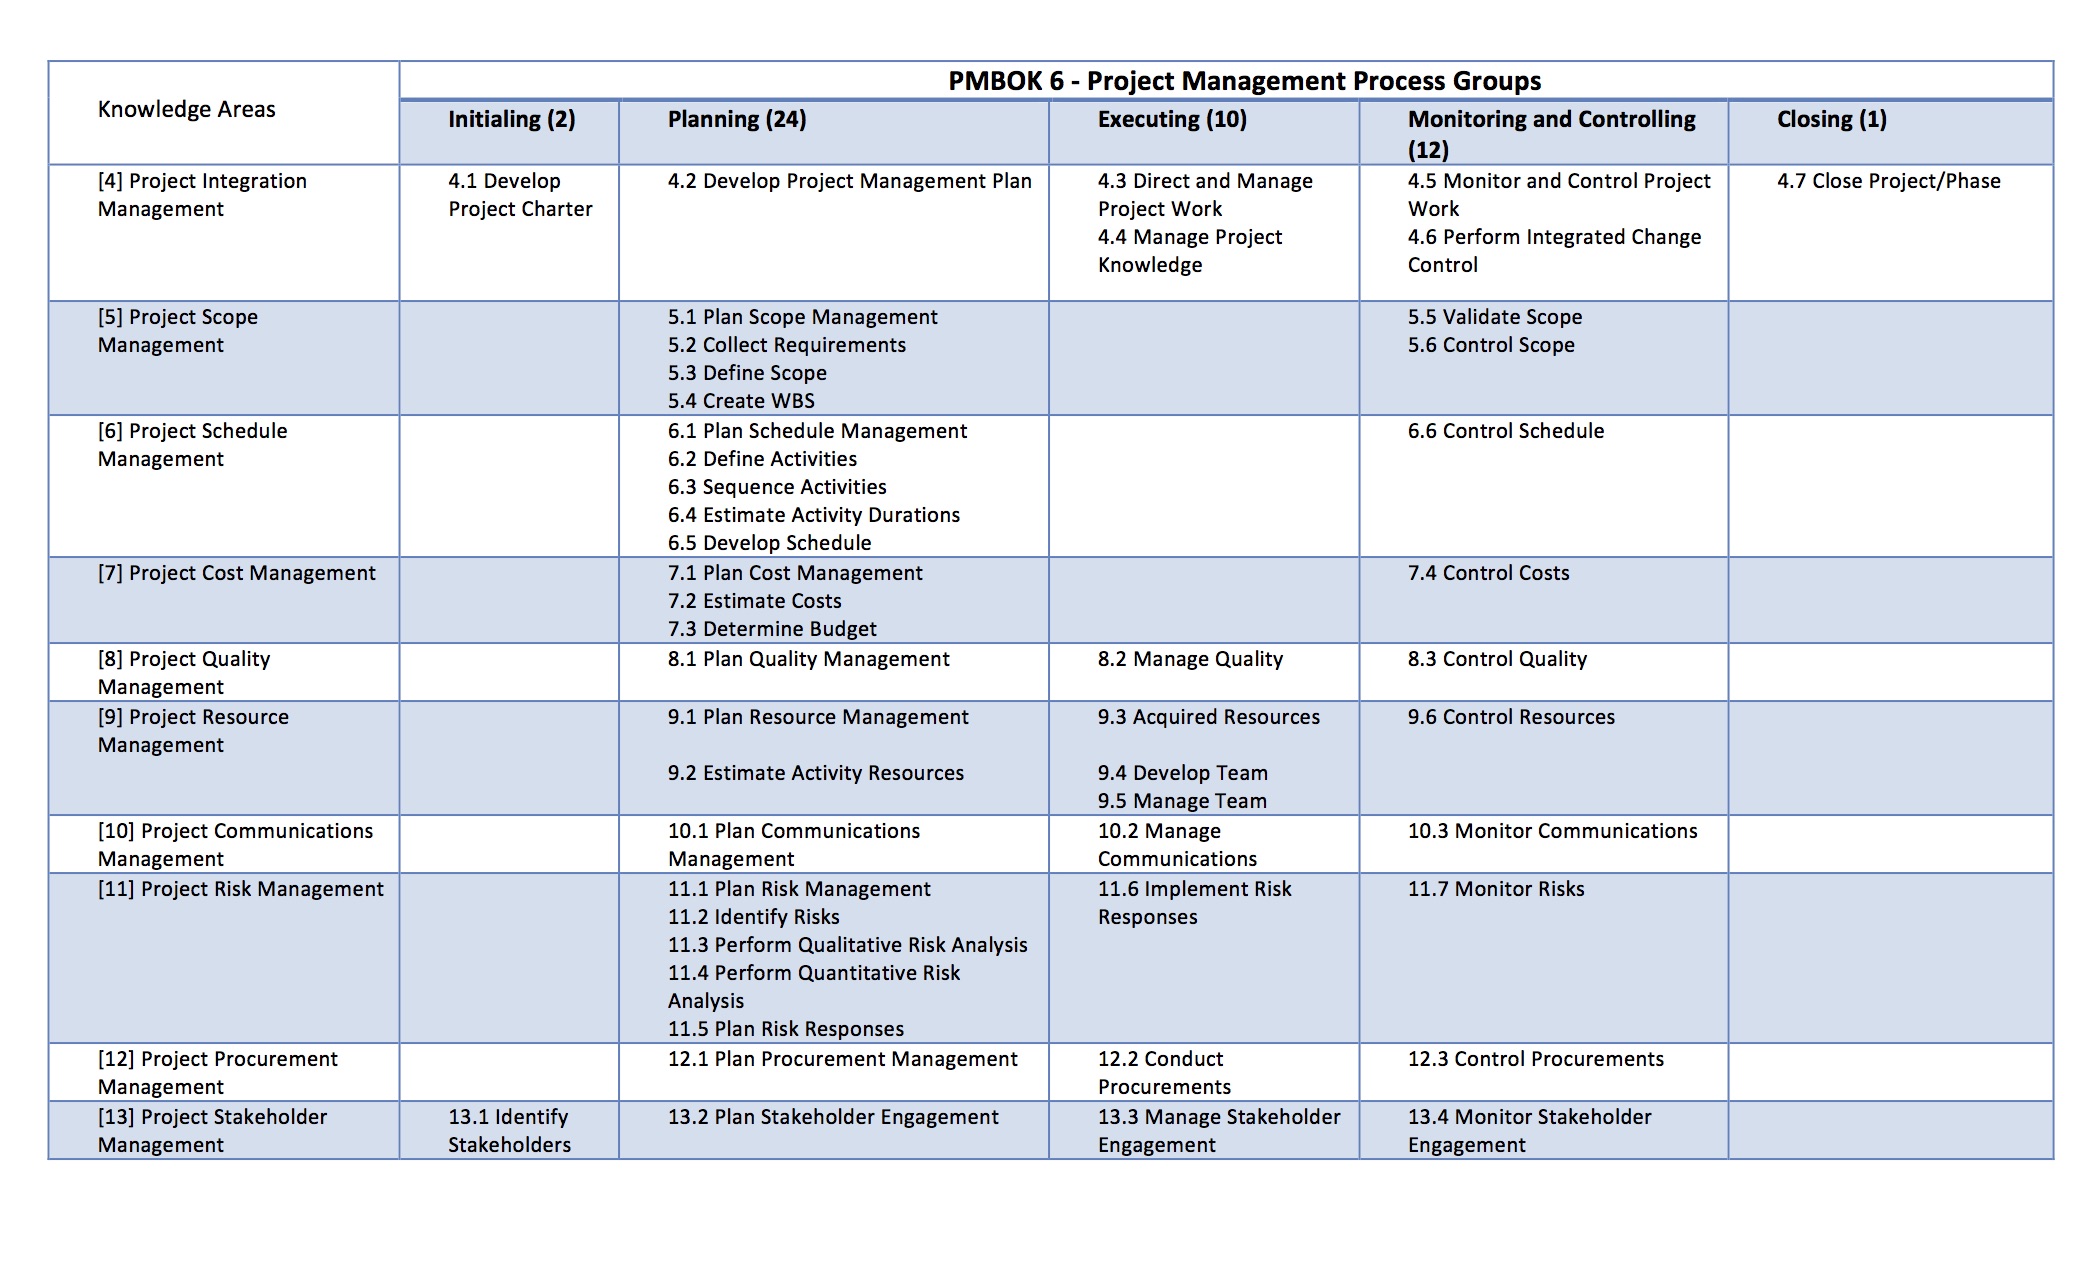 Pmbok 49 Processes Chart